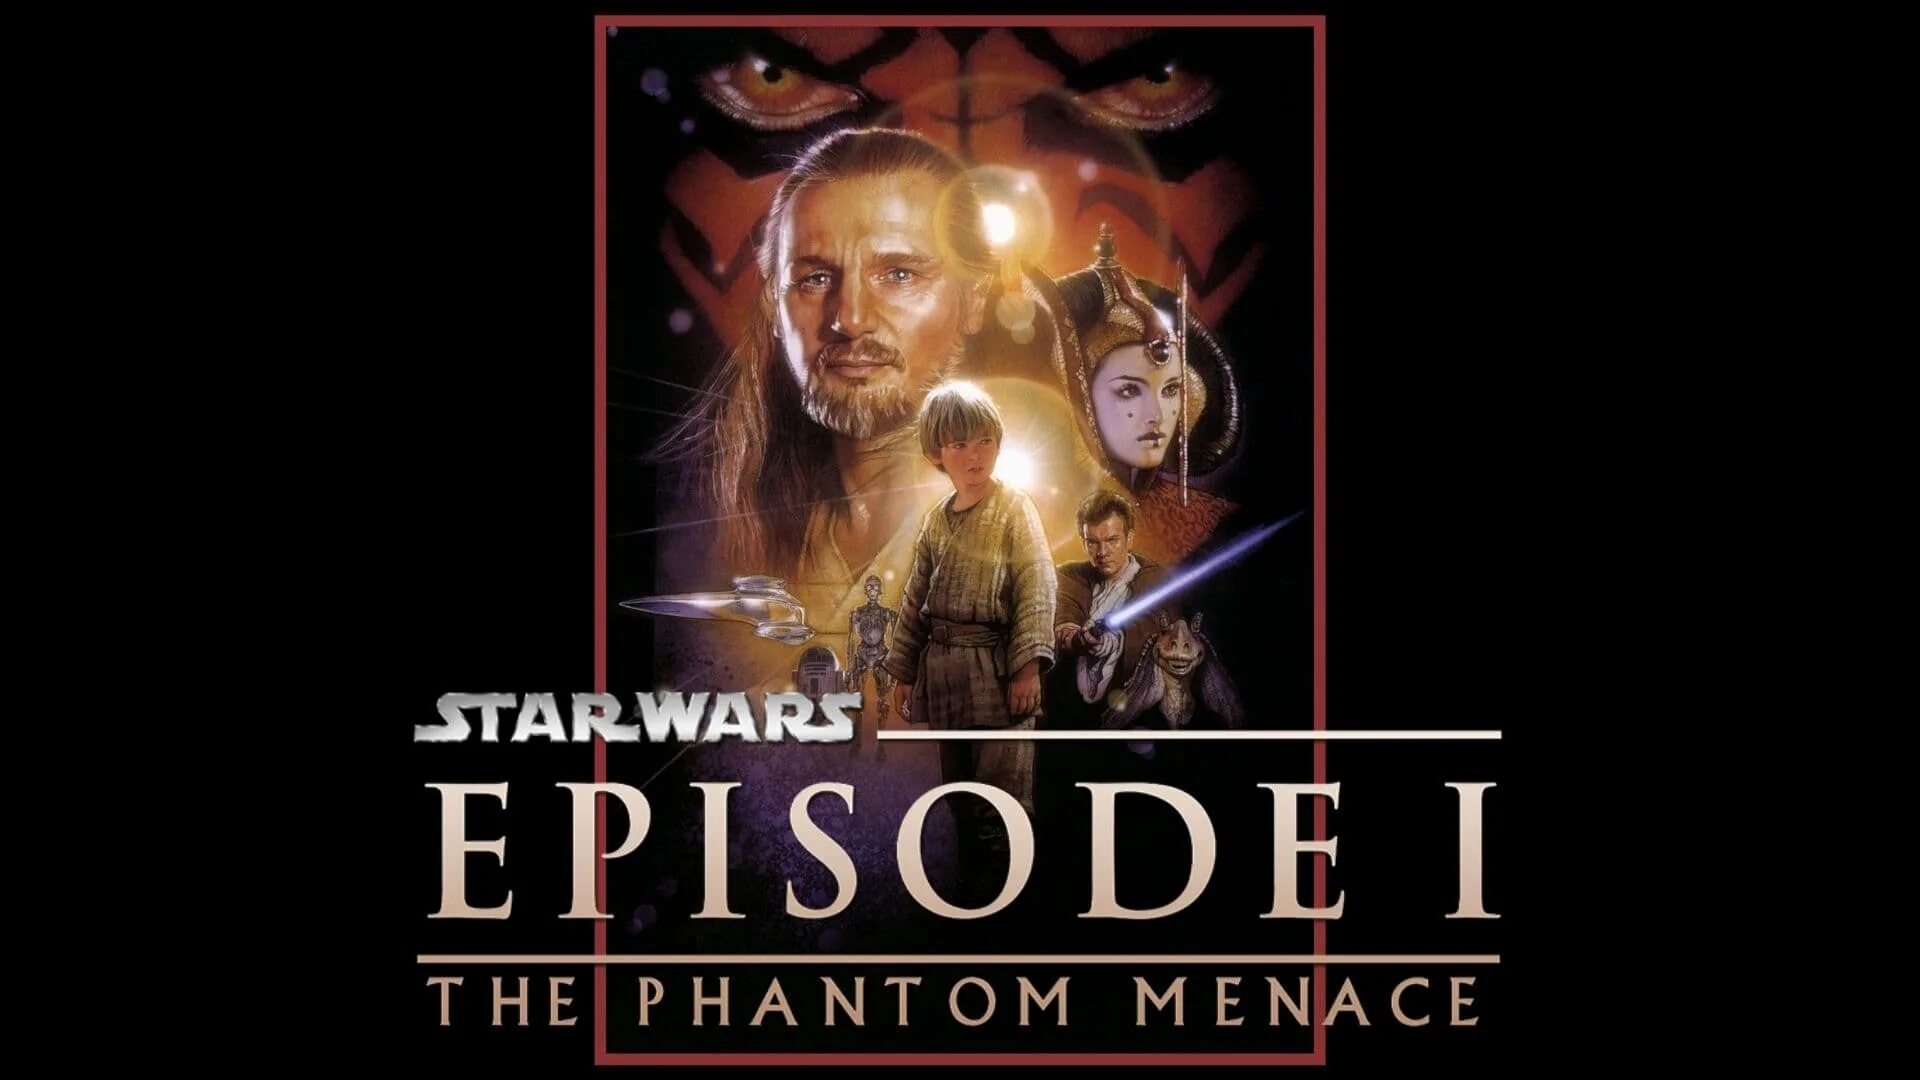 Эпизод 1 звук. Звёздные войны: эпизод 1 — скрытая угроза (1999). Star Wars Episode 1 the Phantom Menace. Star Wars Episode i the Phantom Menace 1999. Терри Брукс Звёздные войны эпизод 1.